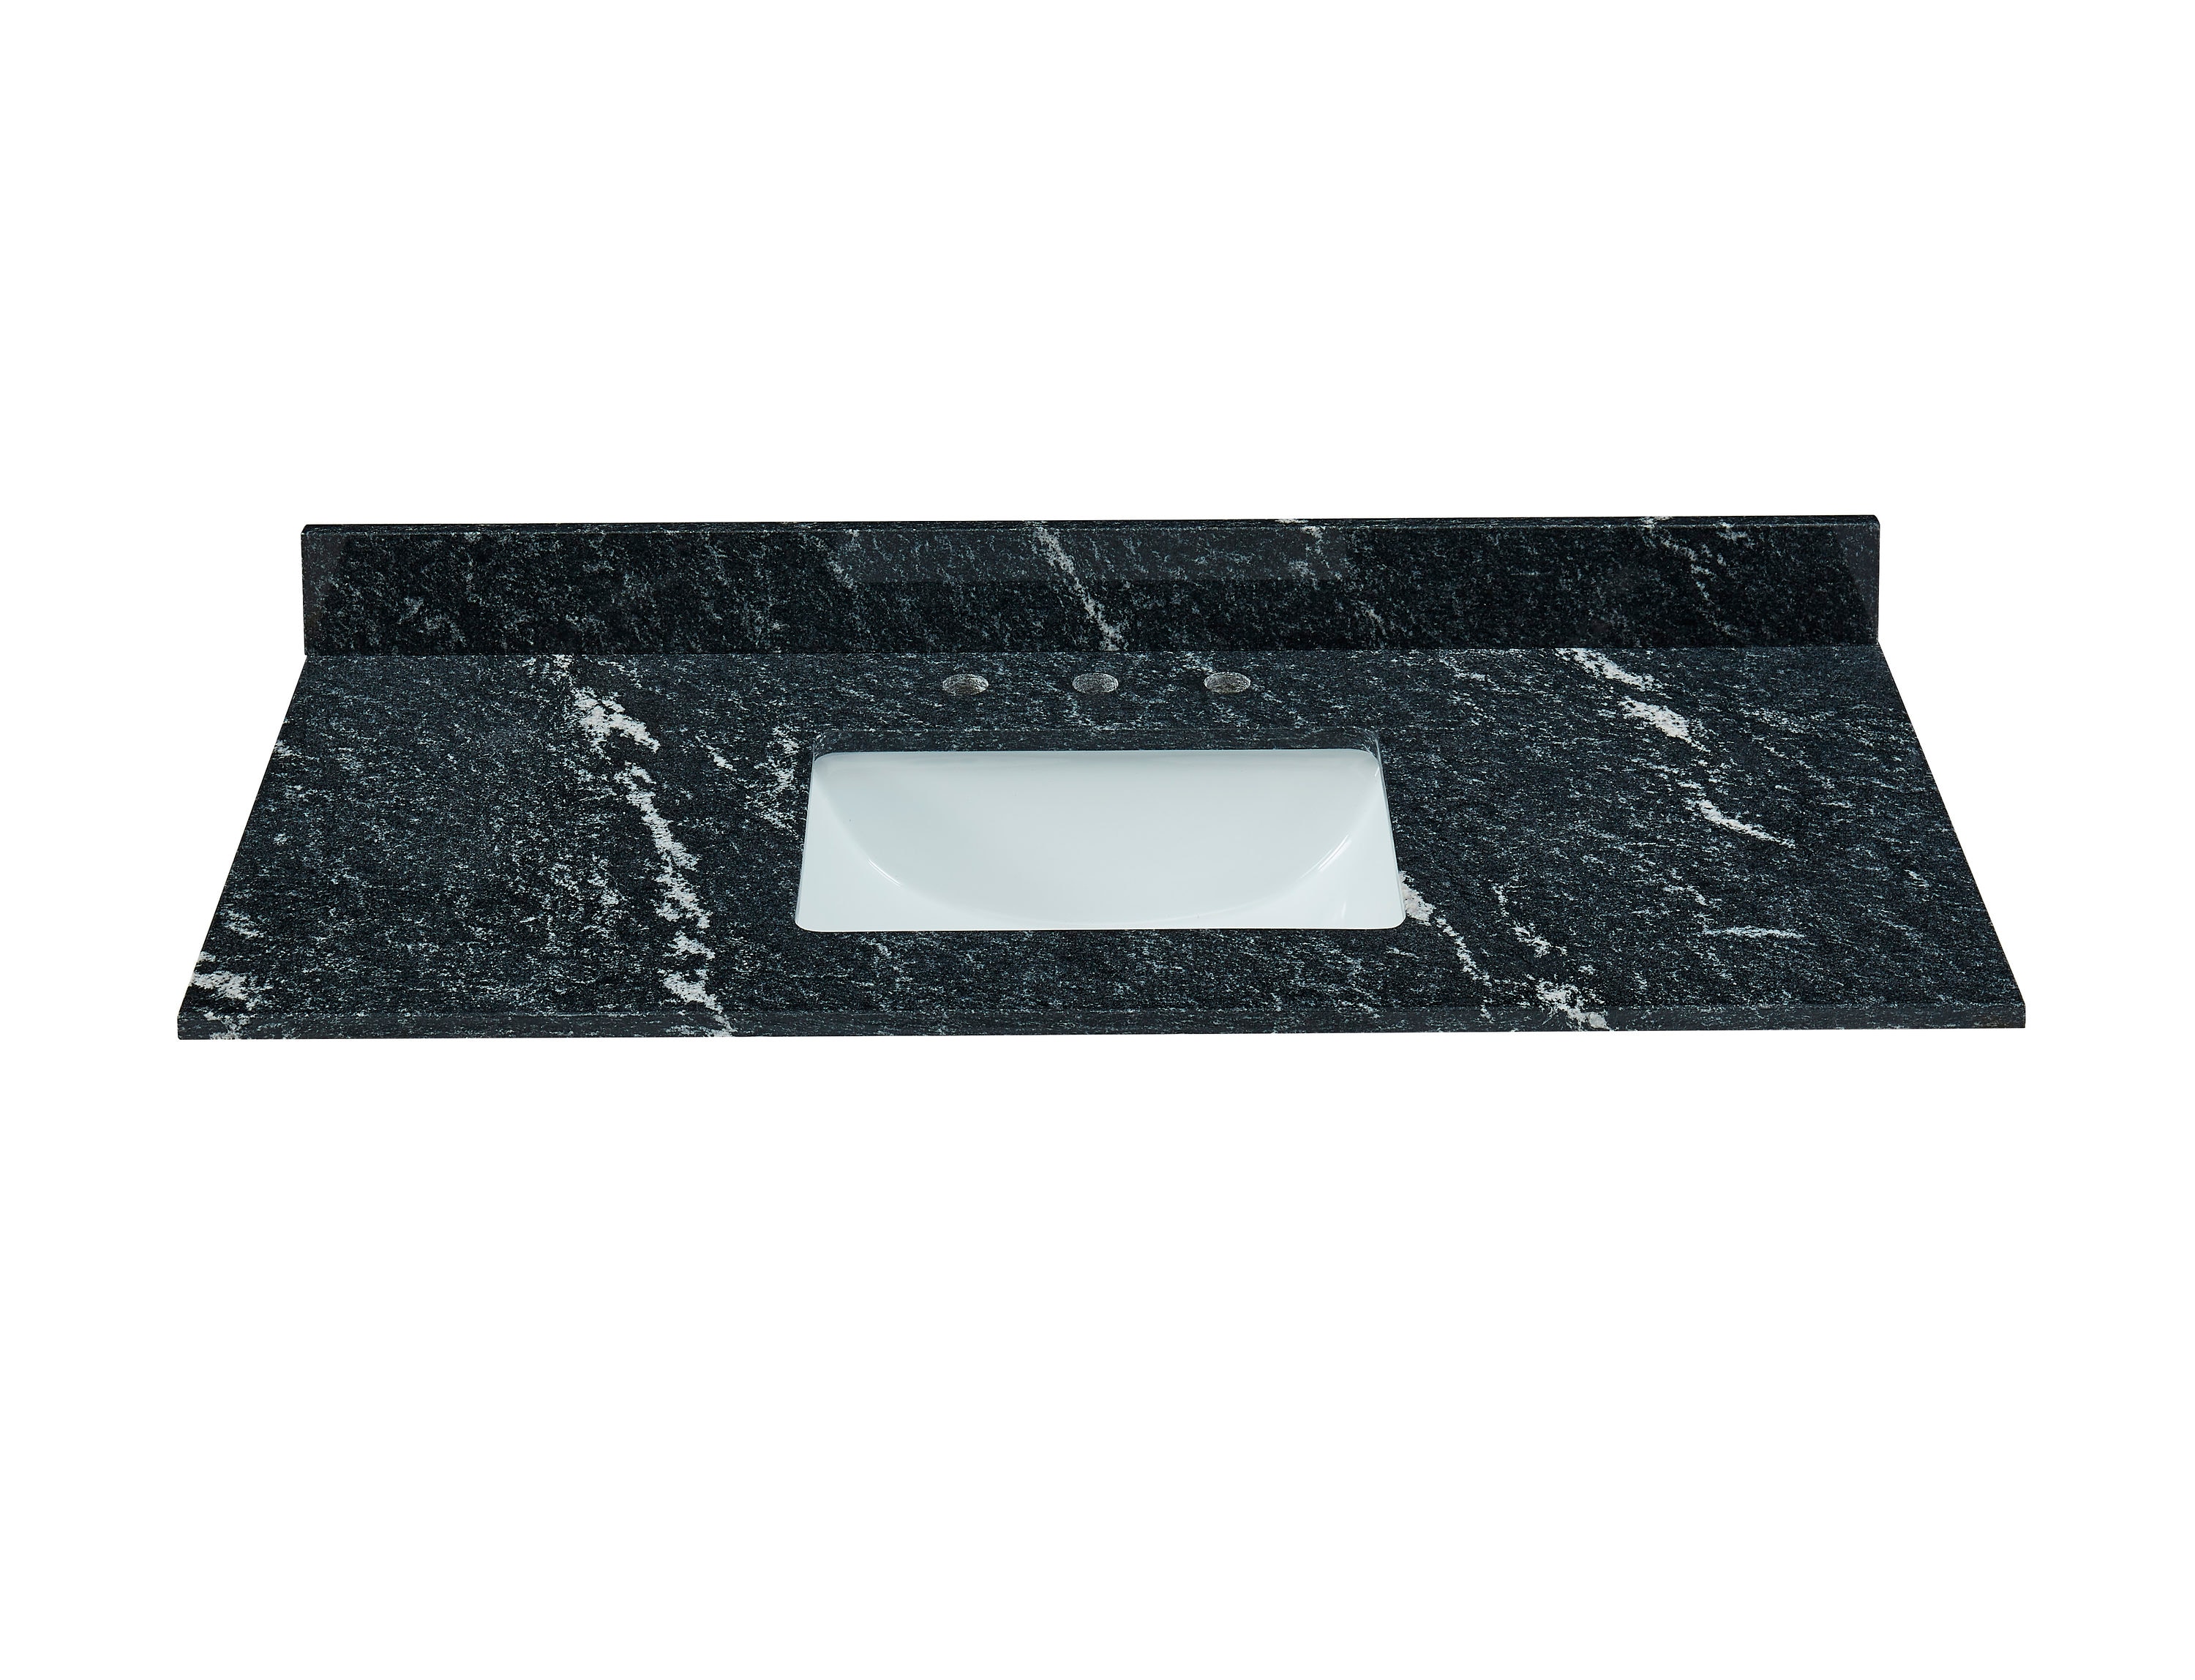 Avanity SUT49BK 49-Inch Black Granite Stone Top